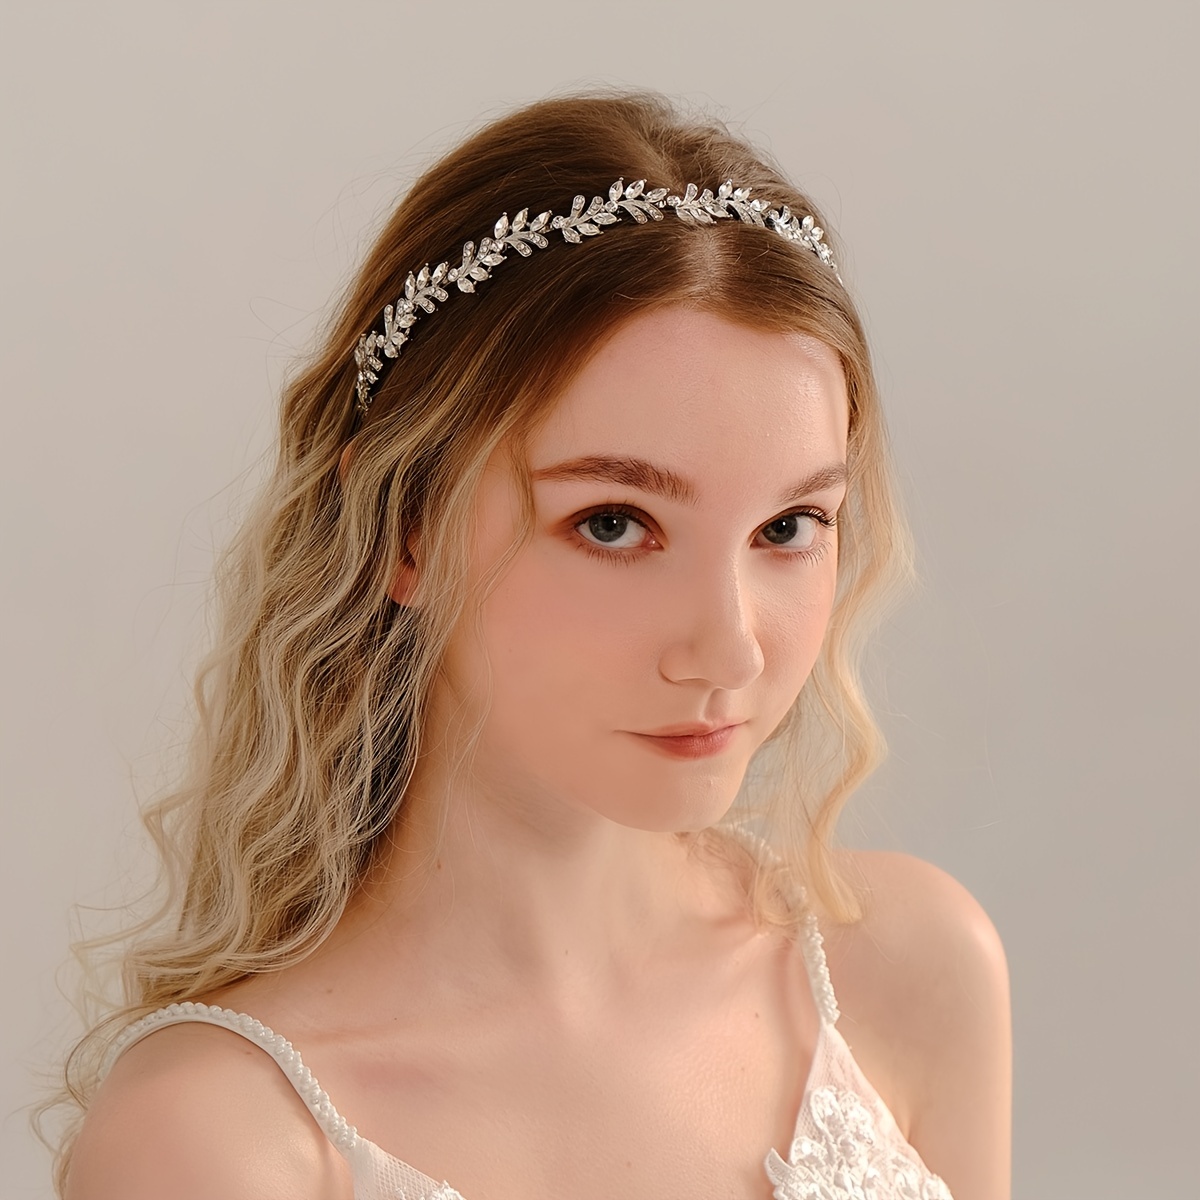 Unique Pearl Hair Flower Leaf Bride Wedding Headband Jewelry Headpieces  Crystal Bridal Hair Accessories, Hair Accessories